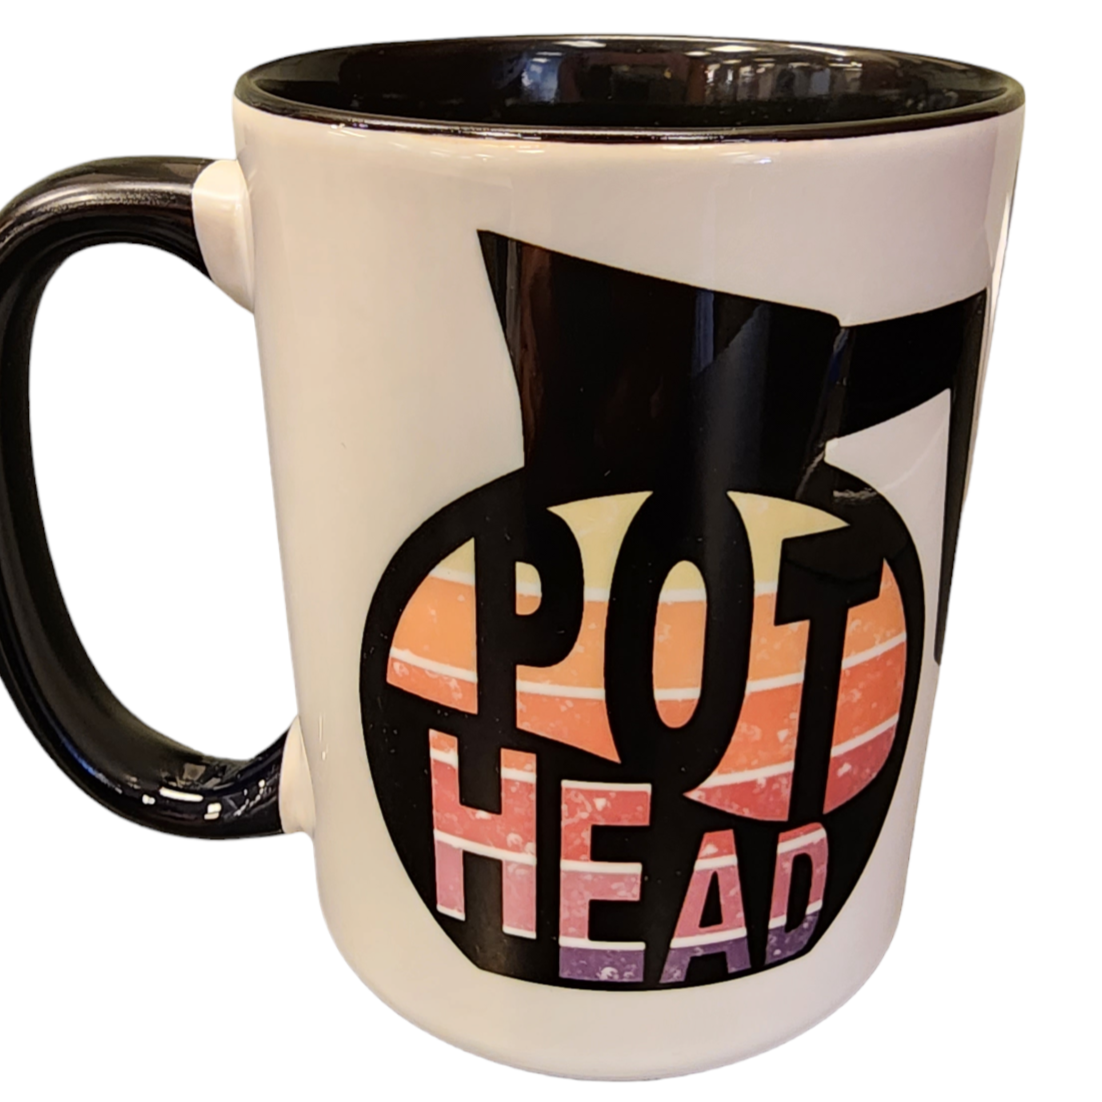 Pot Head Mug w/Black Handle